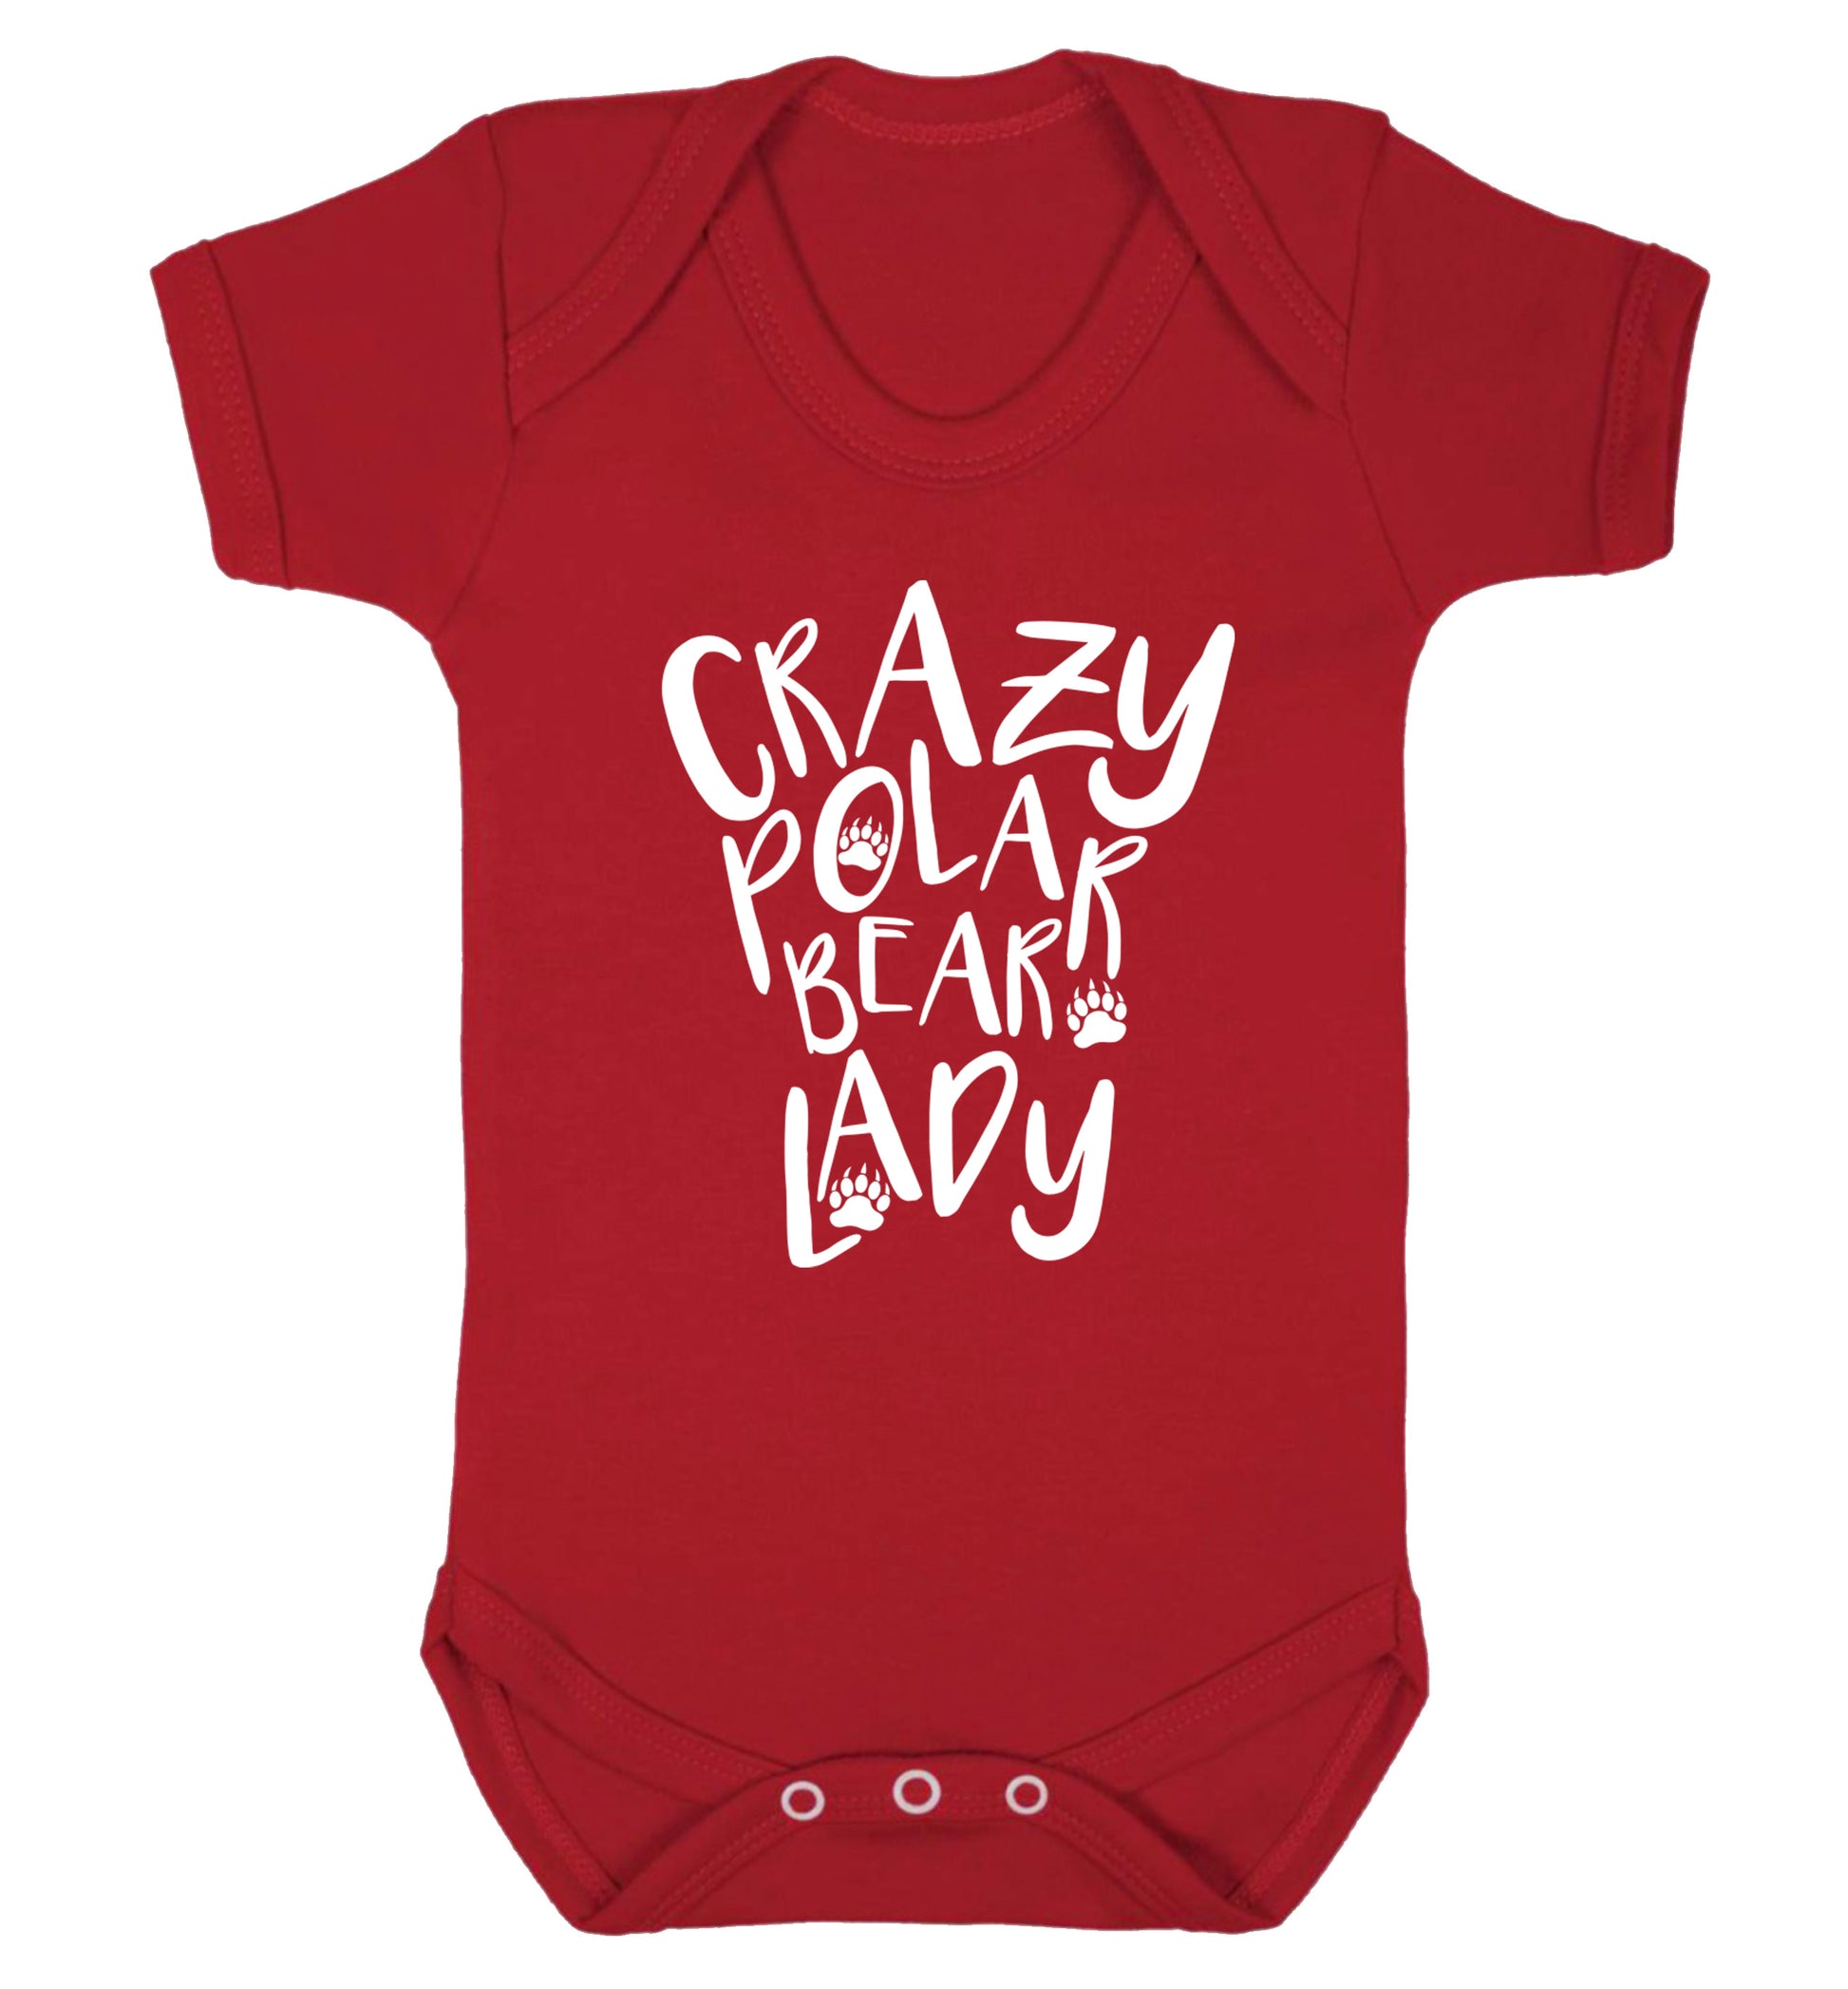 Crazy polar bear lady Baby Vest red 18-24 months